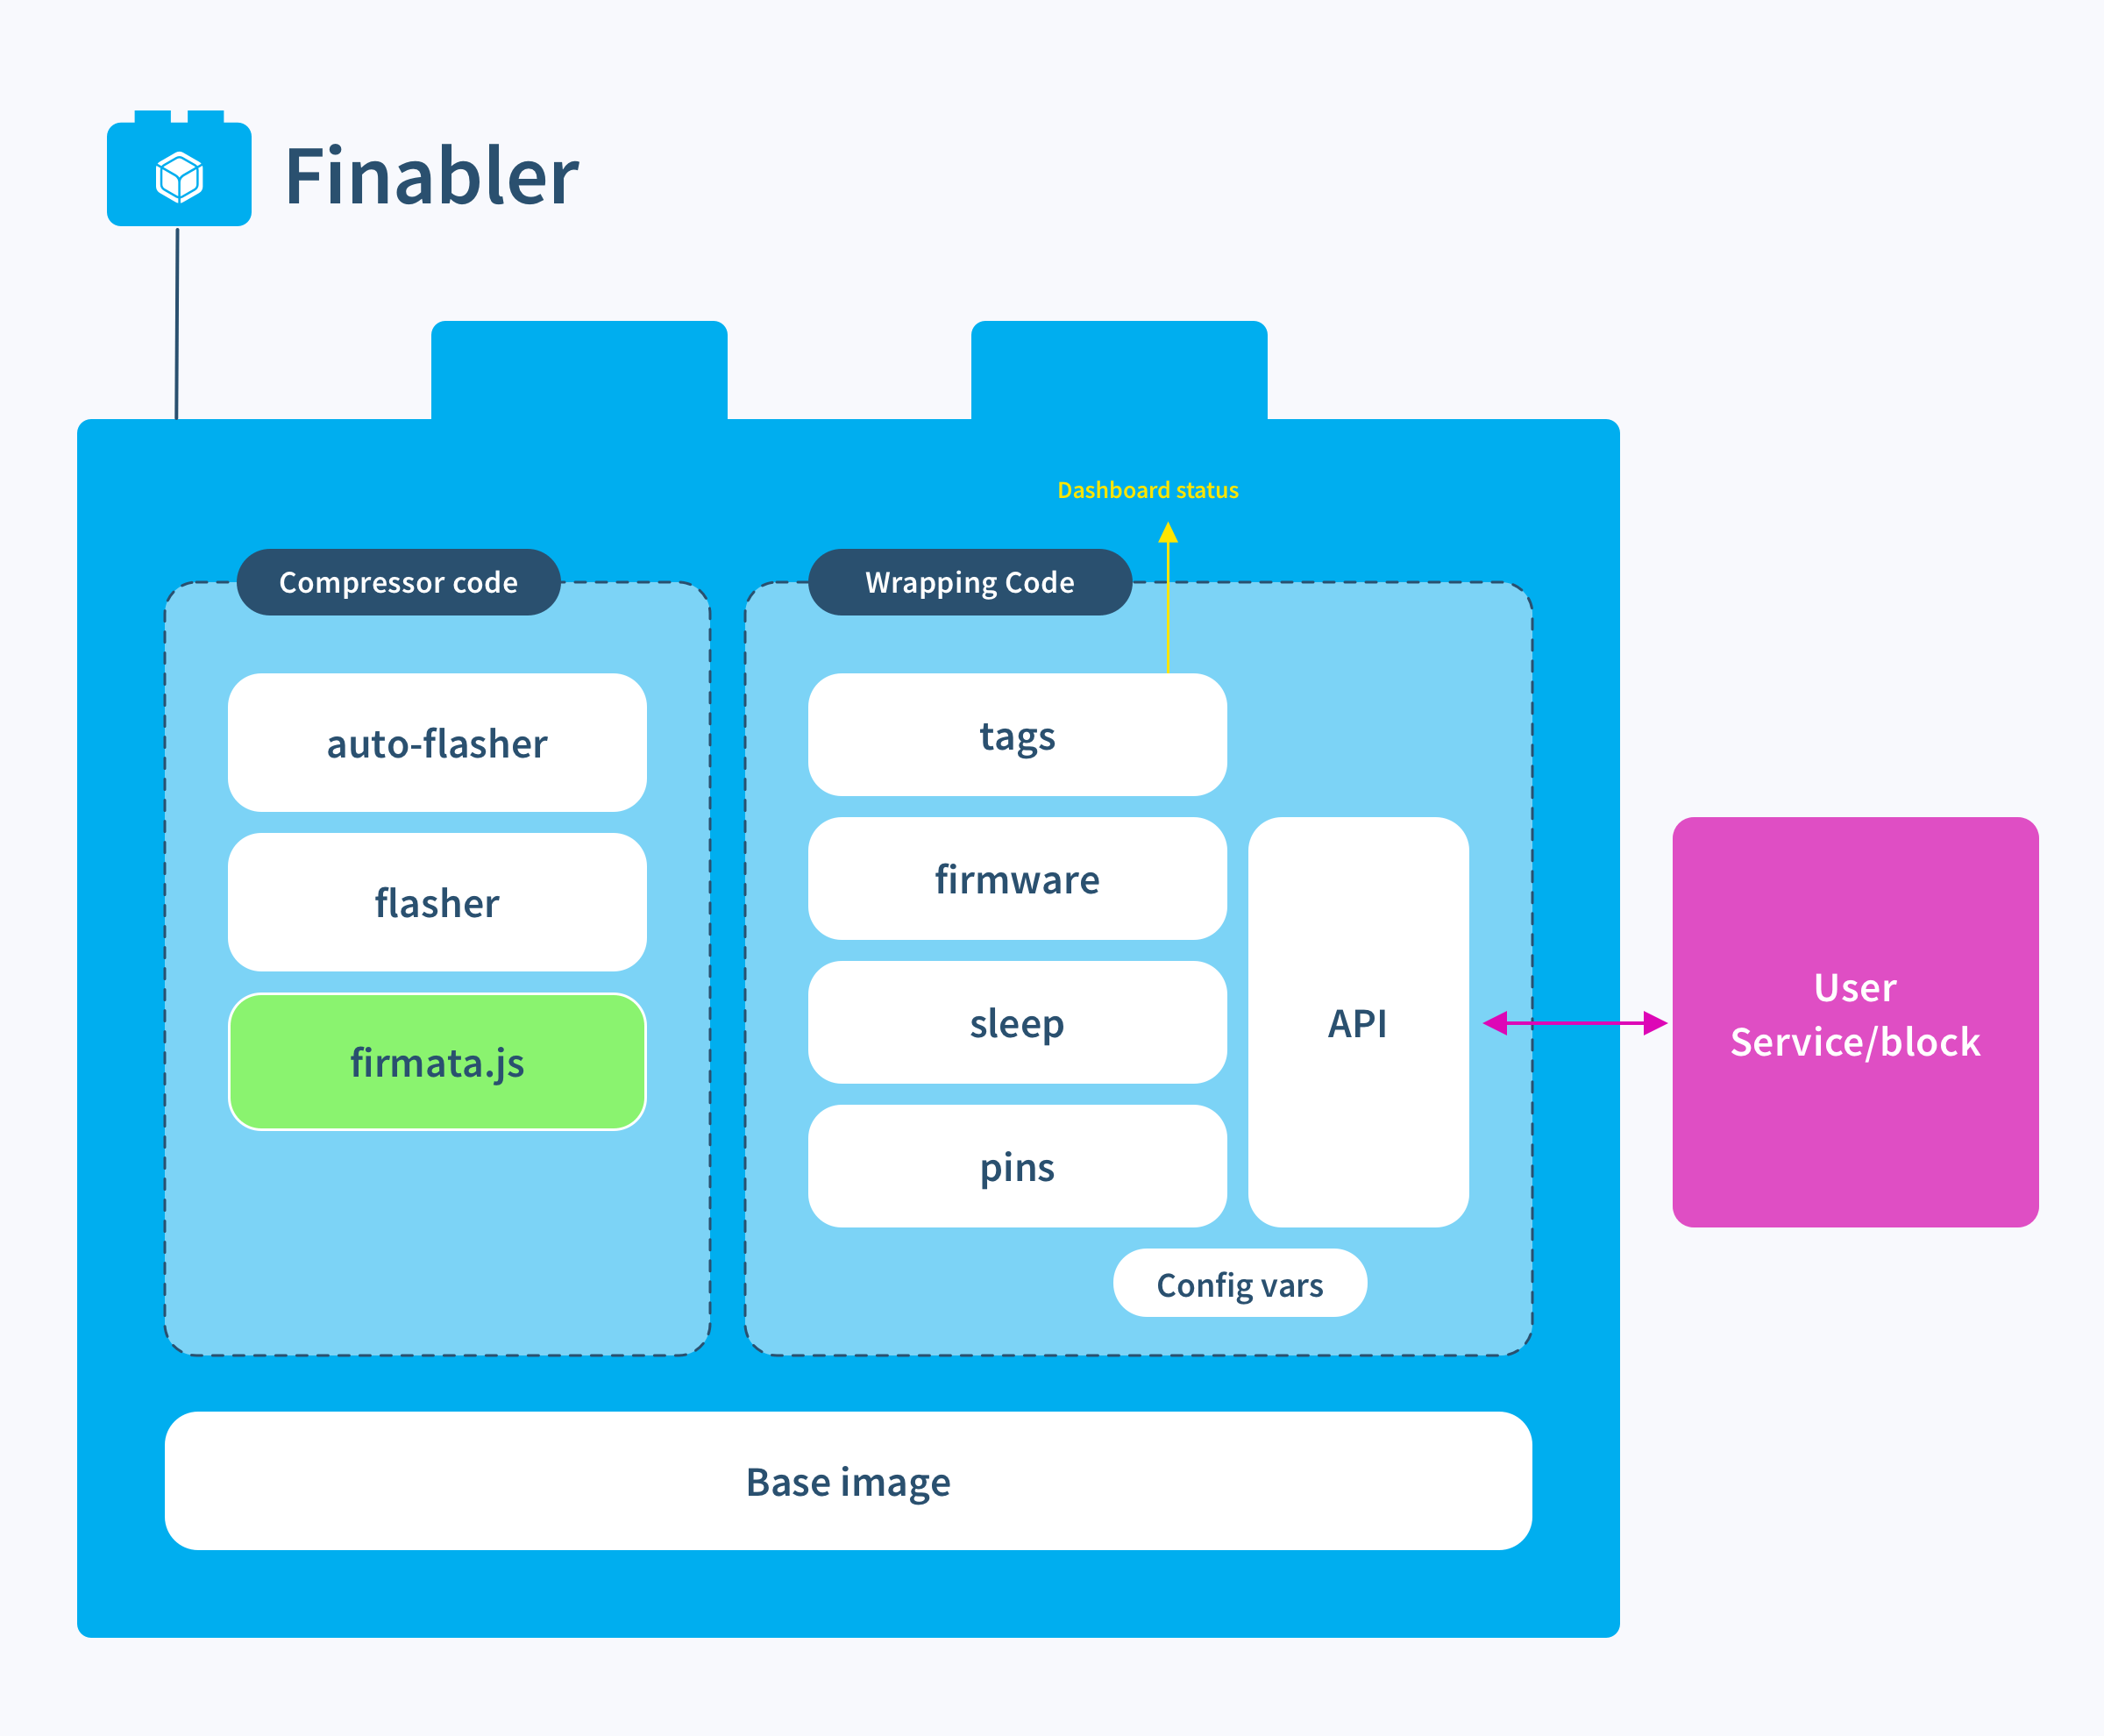 Taking a closer look at Finabler block